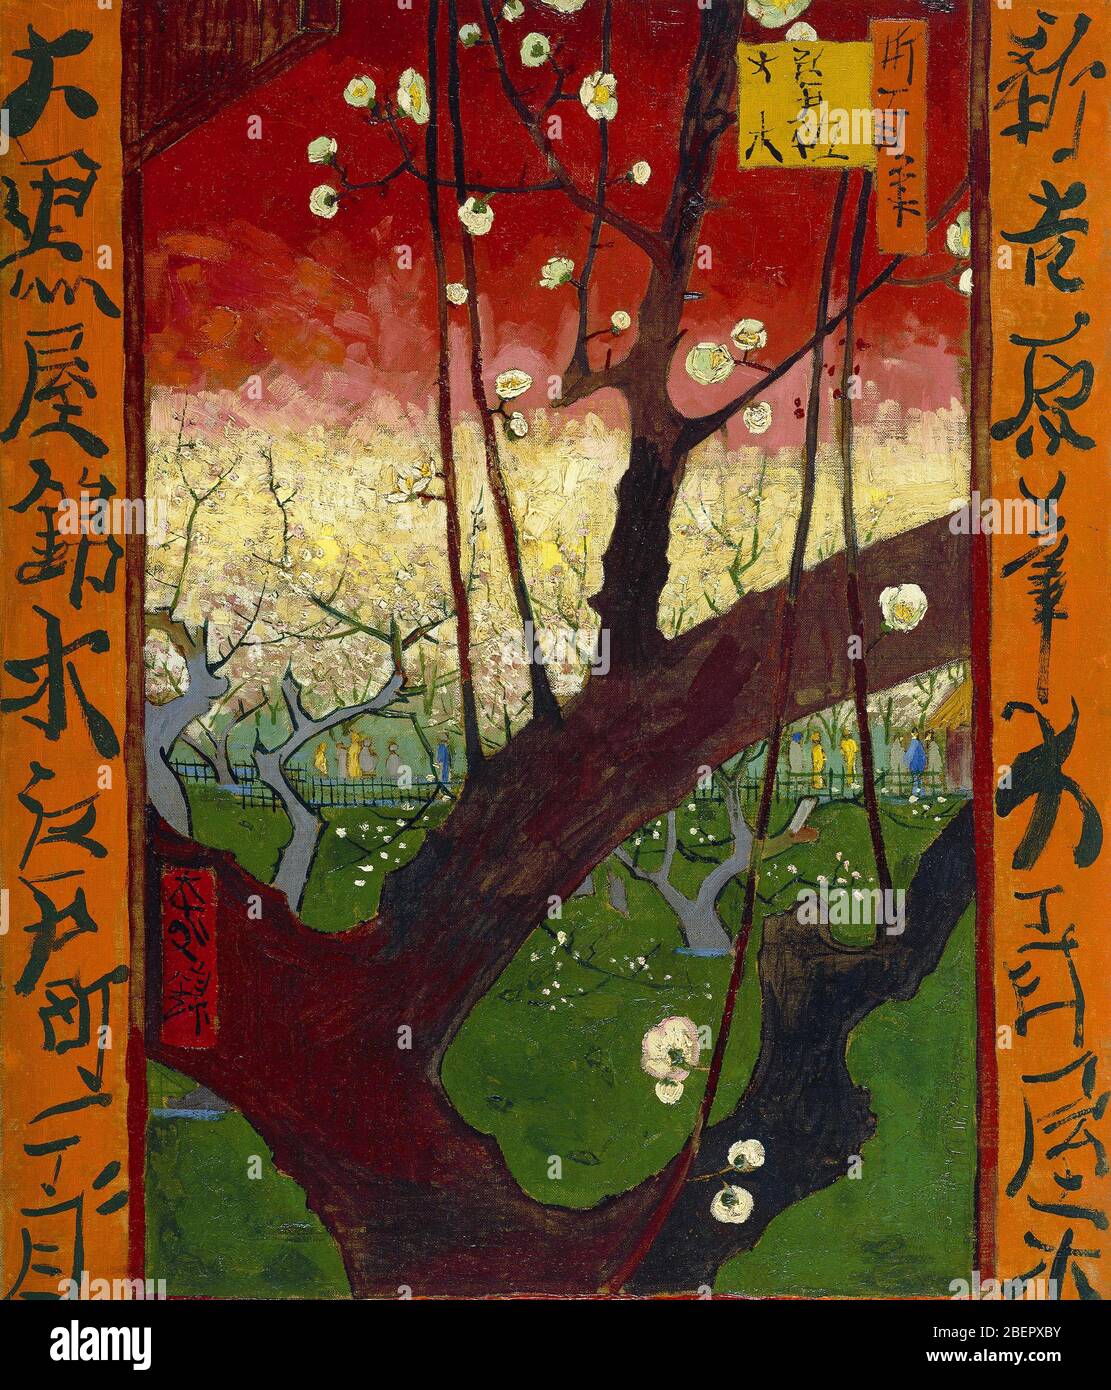 Serie Japonaise (dopo Utagawa Hiroshige) : l'albero di susina fiorente di Vincent van Gogh 1887. Museo Van Gogh, Amsterdam Foto Stock